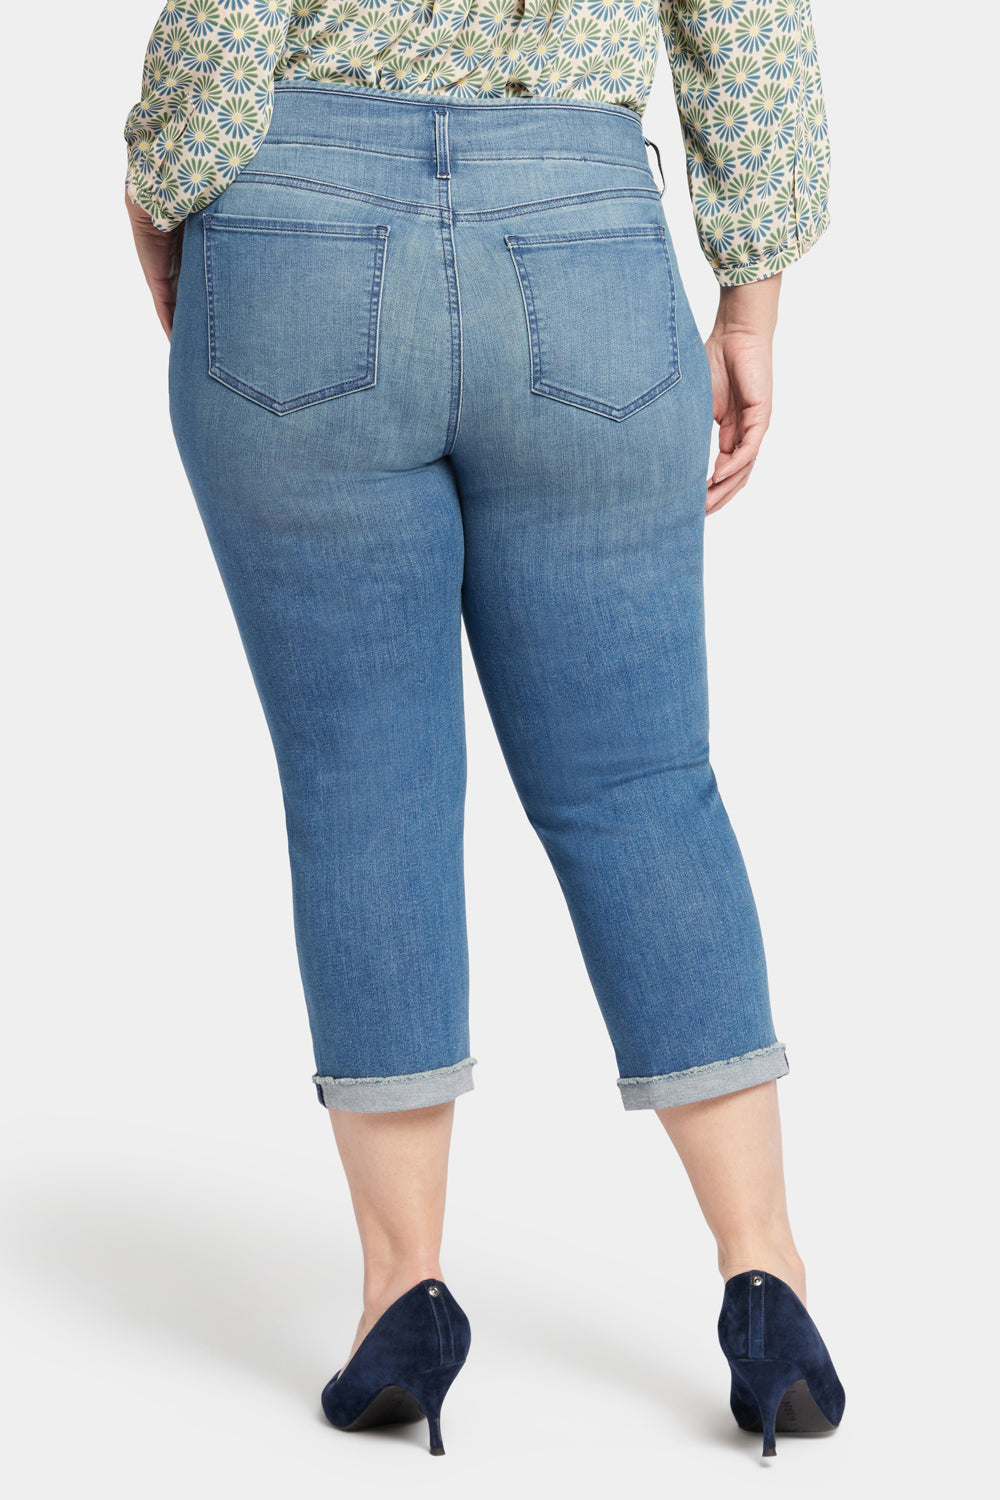 Chloe Capri Jeans In Plus Size With Cuffs - Stargazer Blue | NYDJ